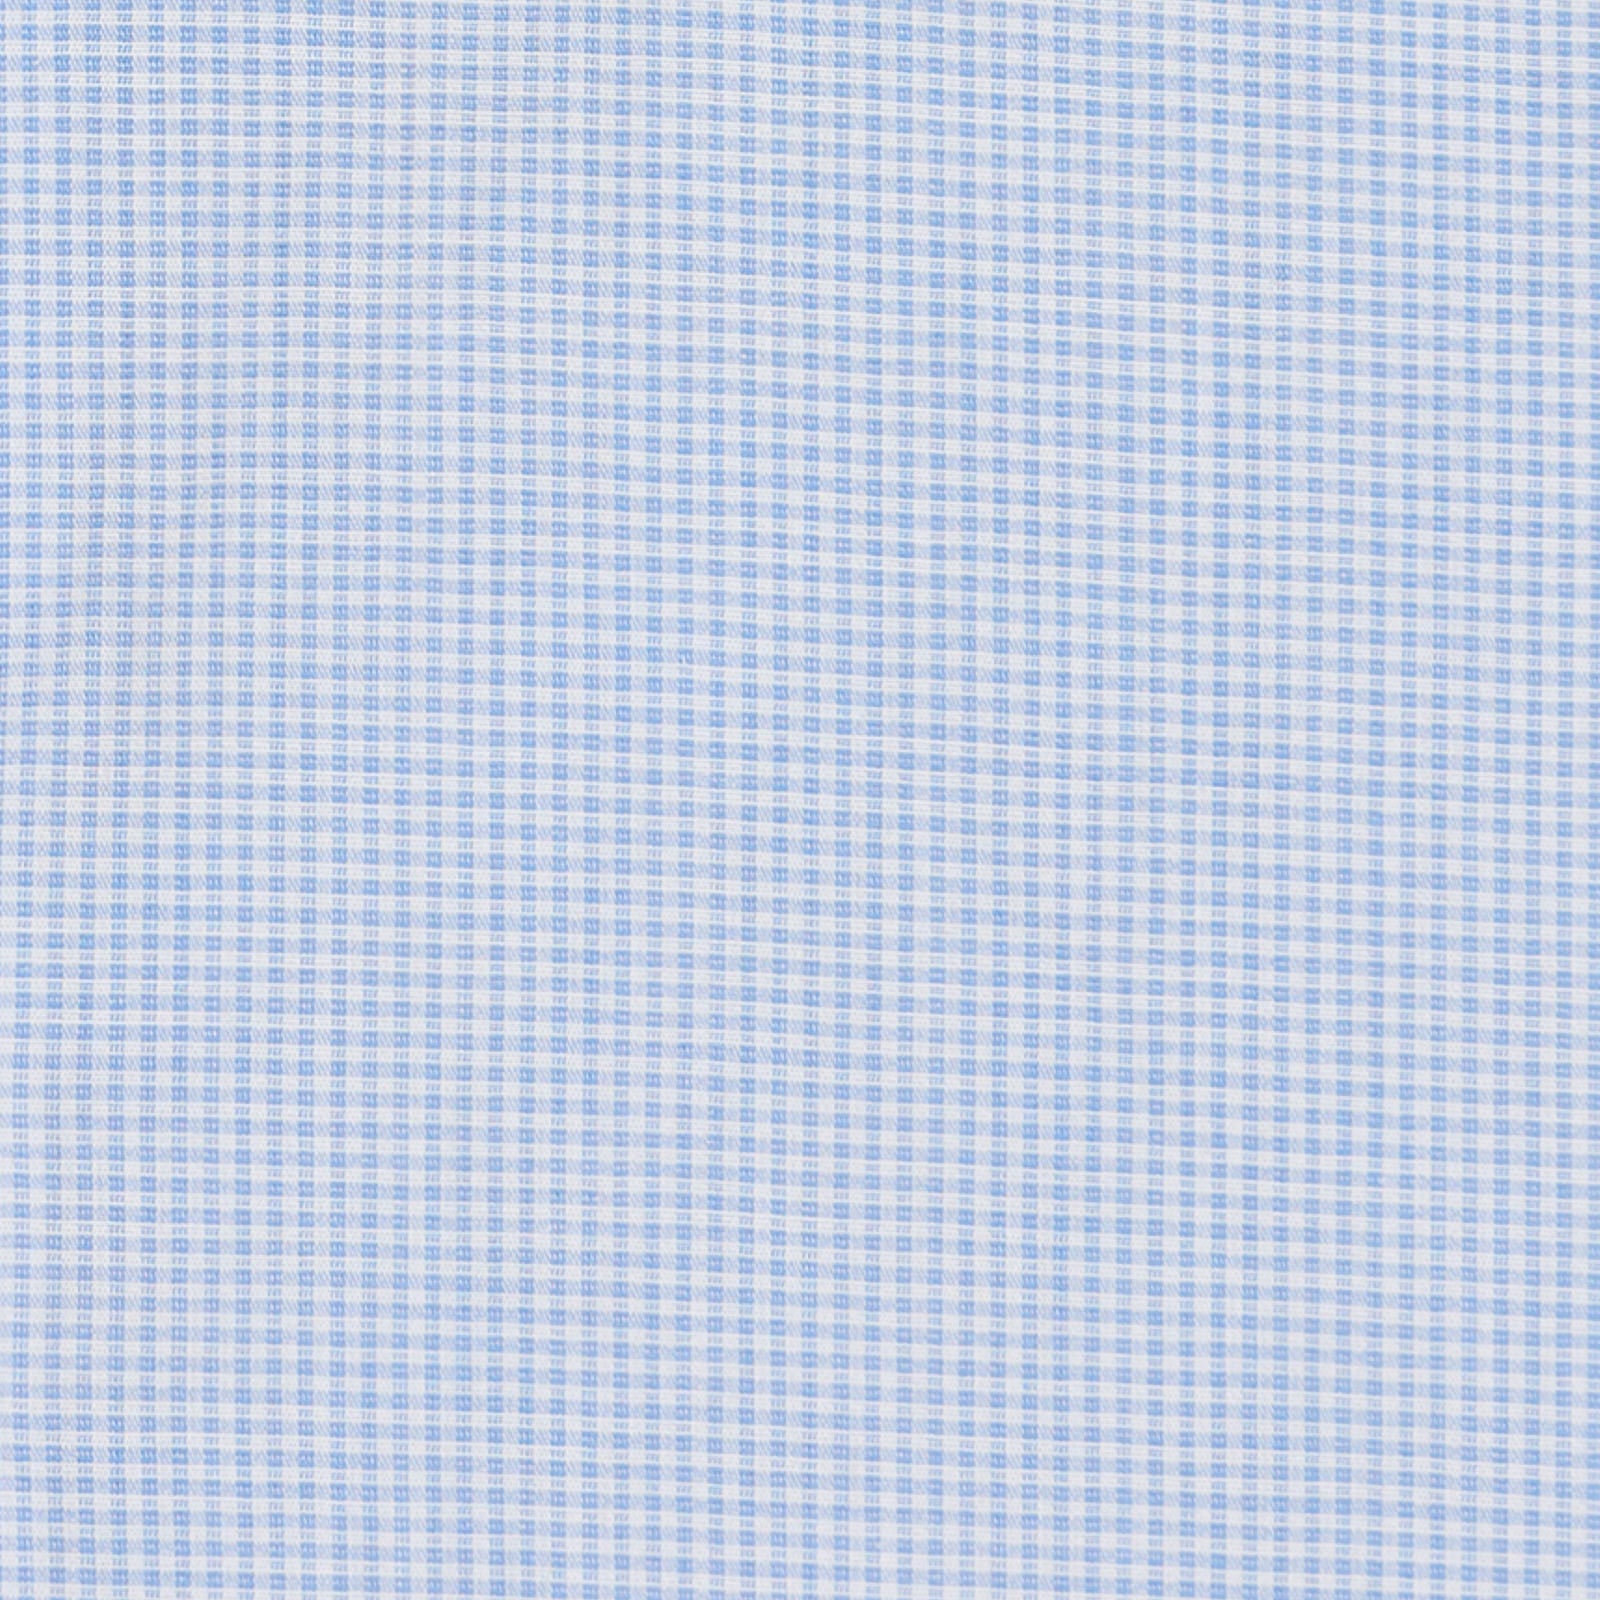 KITON Napoli Handmade Blue Checkered Poplin Cotton Dress Shirt EU 39 US 15.5 NEW KITON